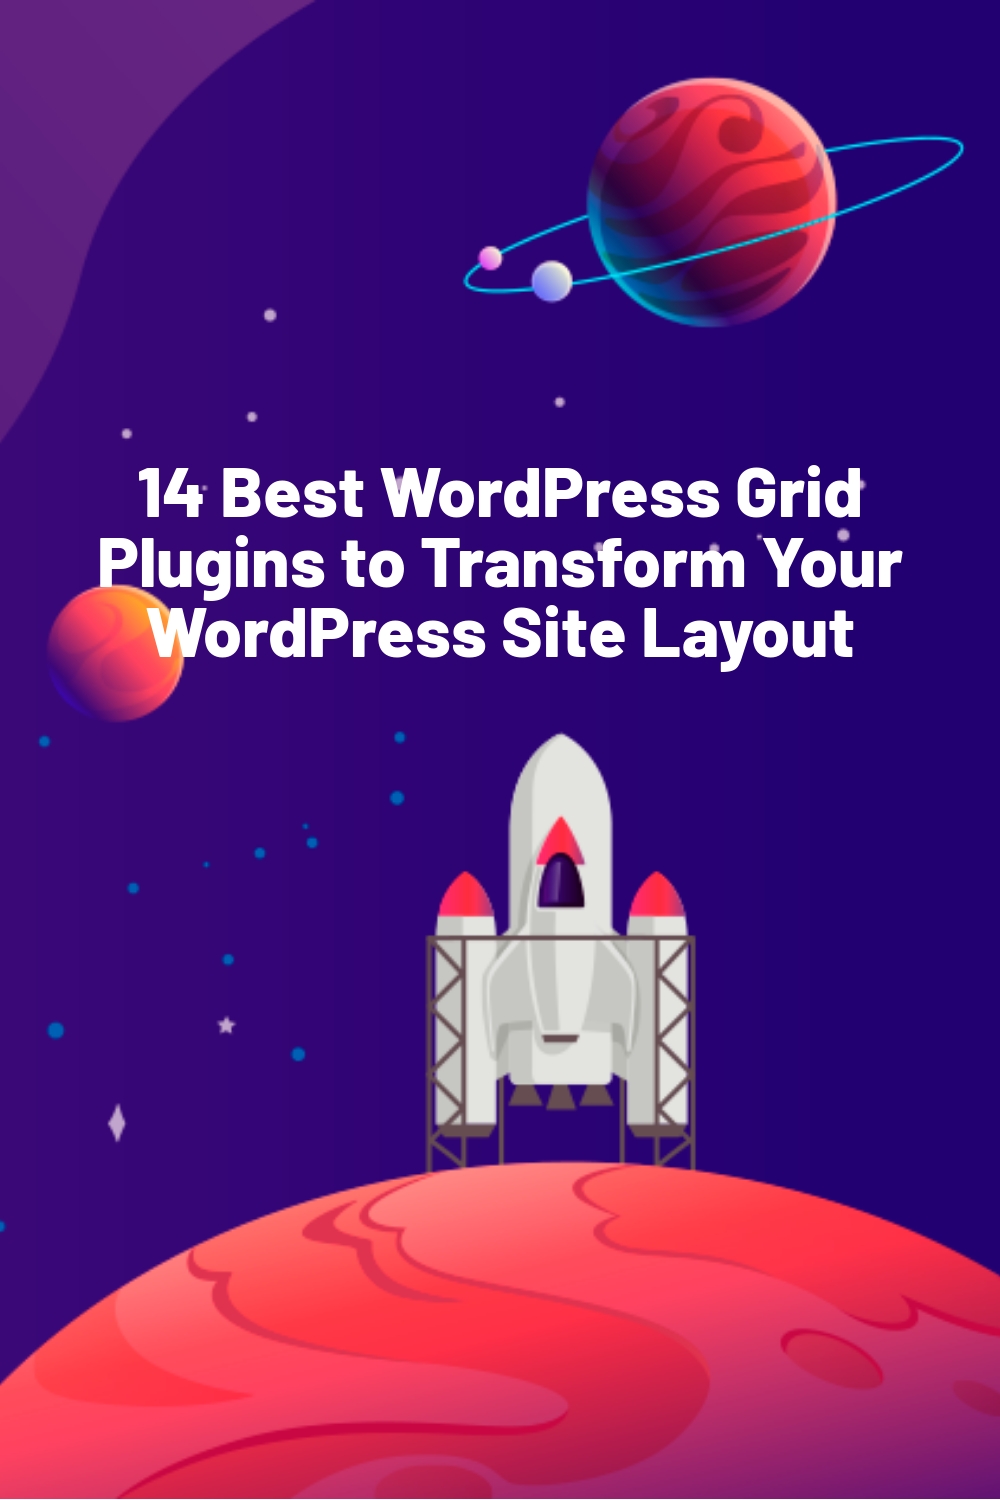 14 Best WordPress Grid Plugins to Transform Your WordPress Site Layout